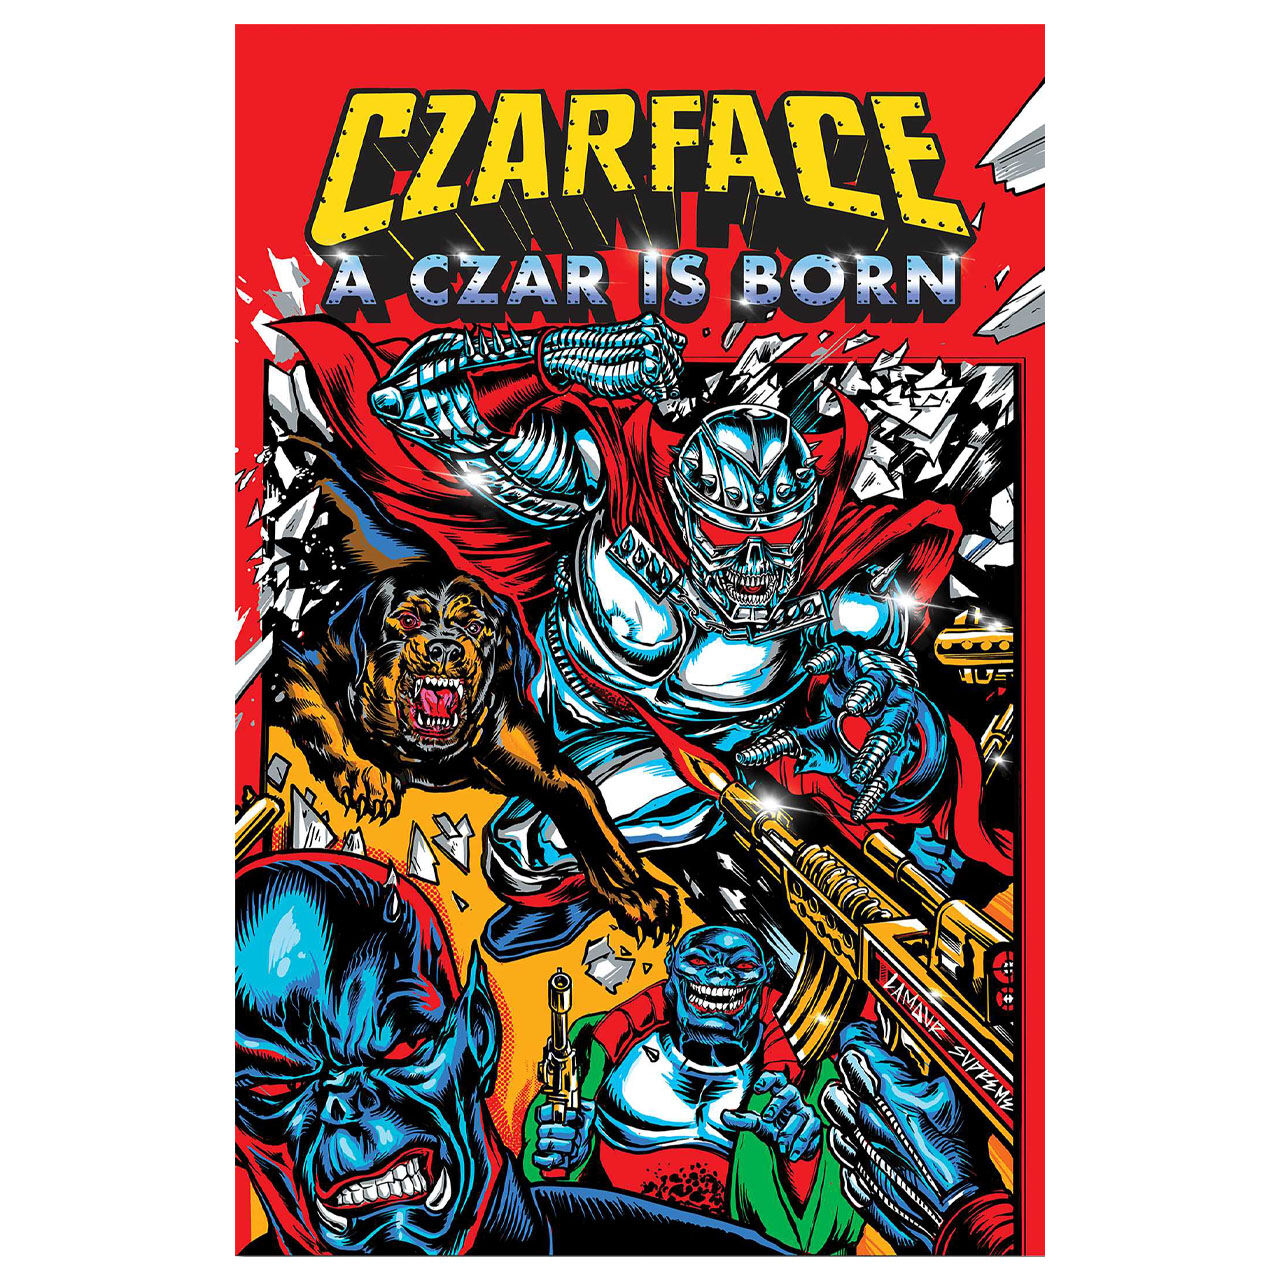 CZARFACE A Czar is Born Graphic Novel Hardcover Book